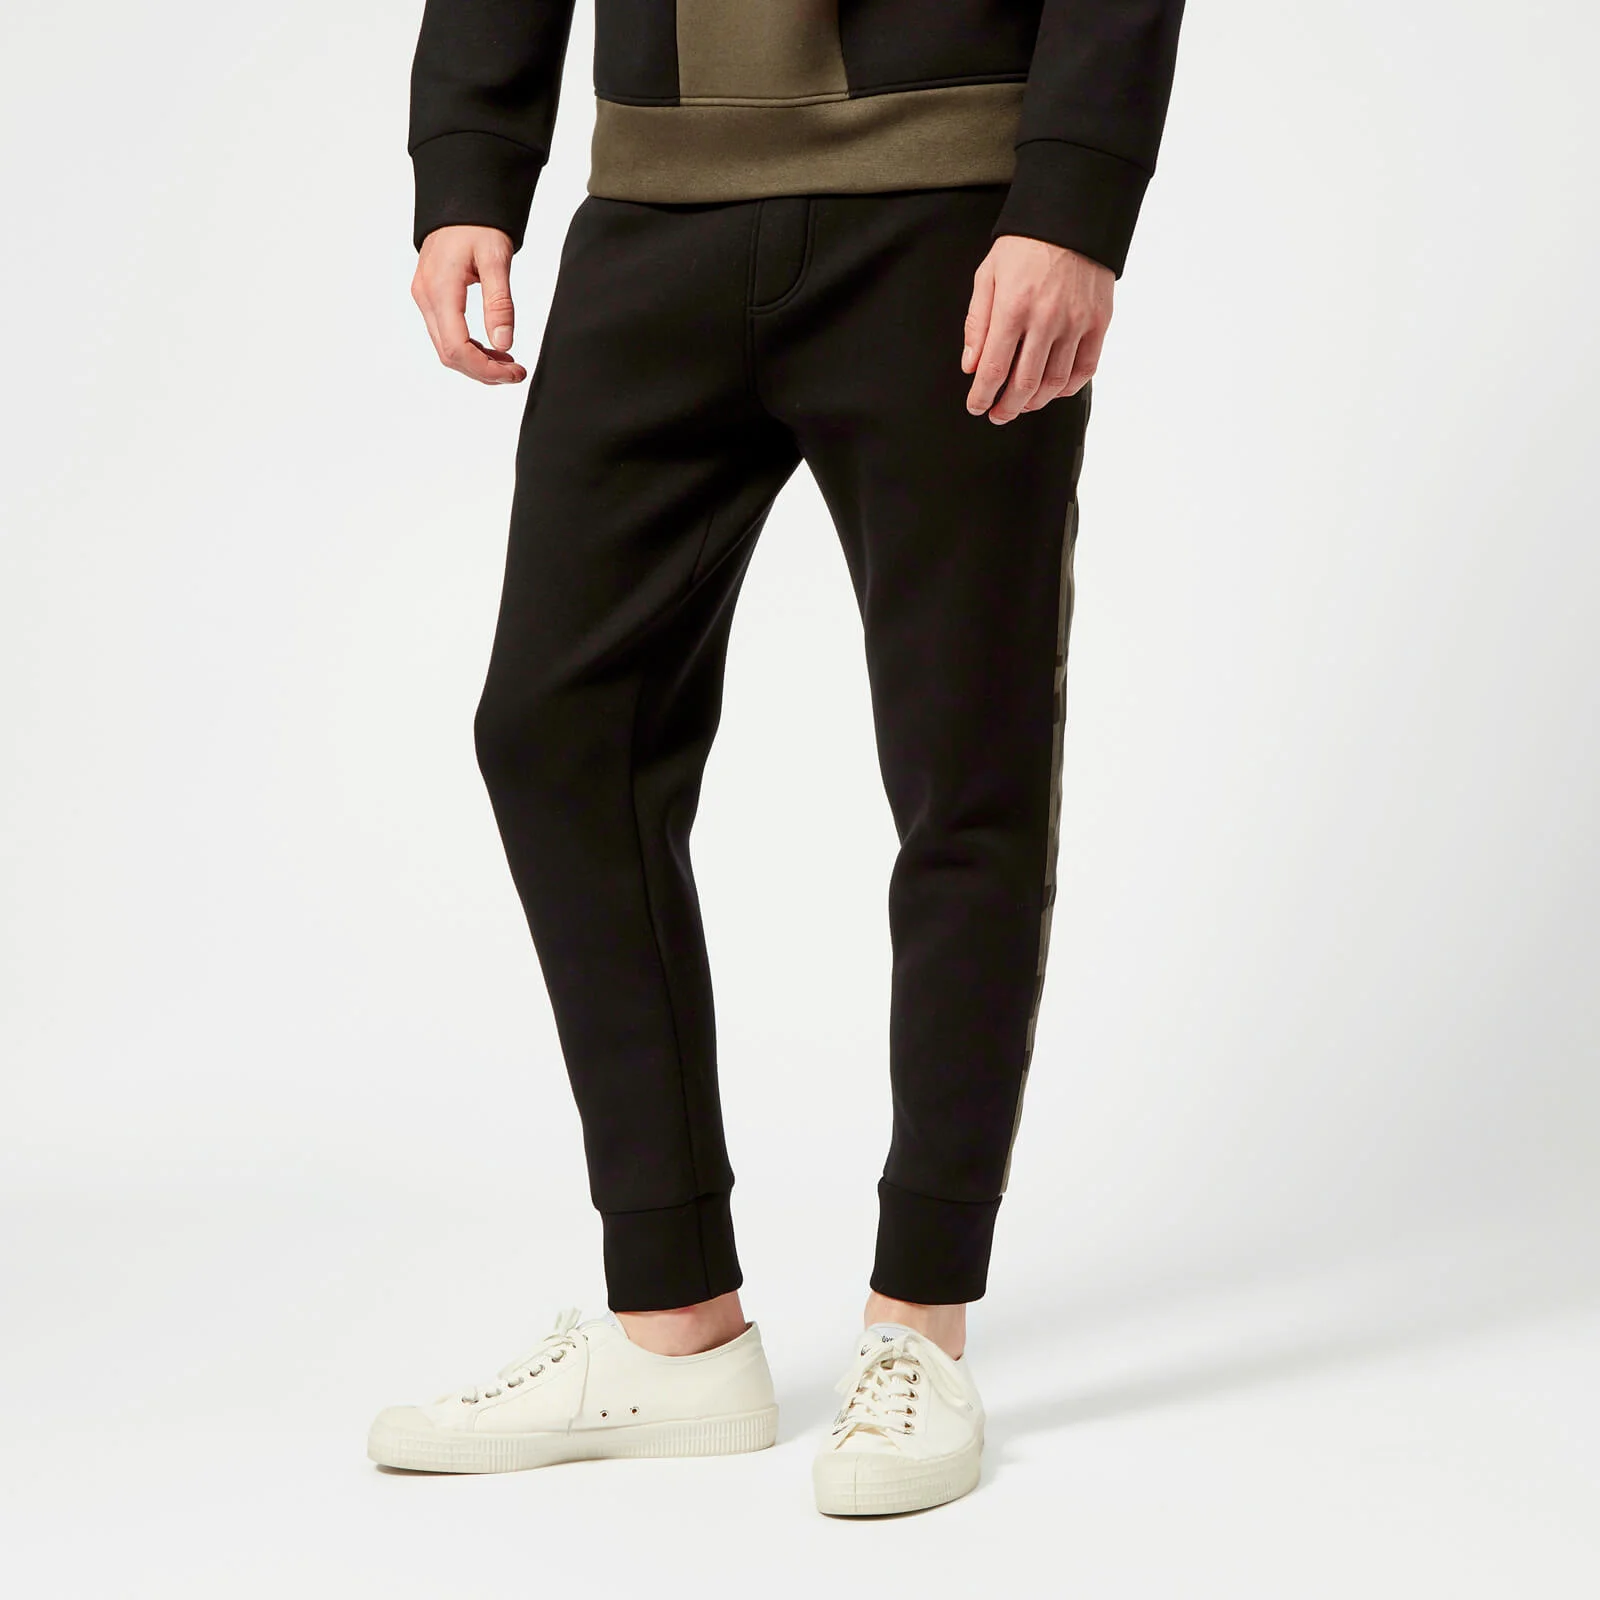 Neil Barrett Men's Camo Stripe Bonded Soft Sweatpants - Black/White Image 1